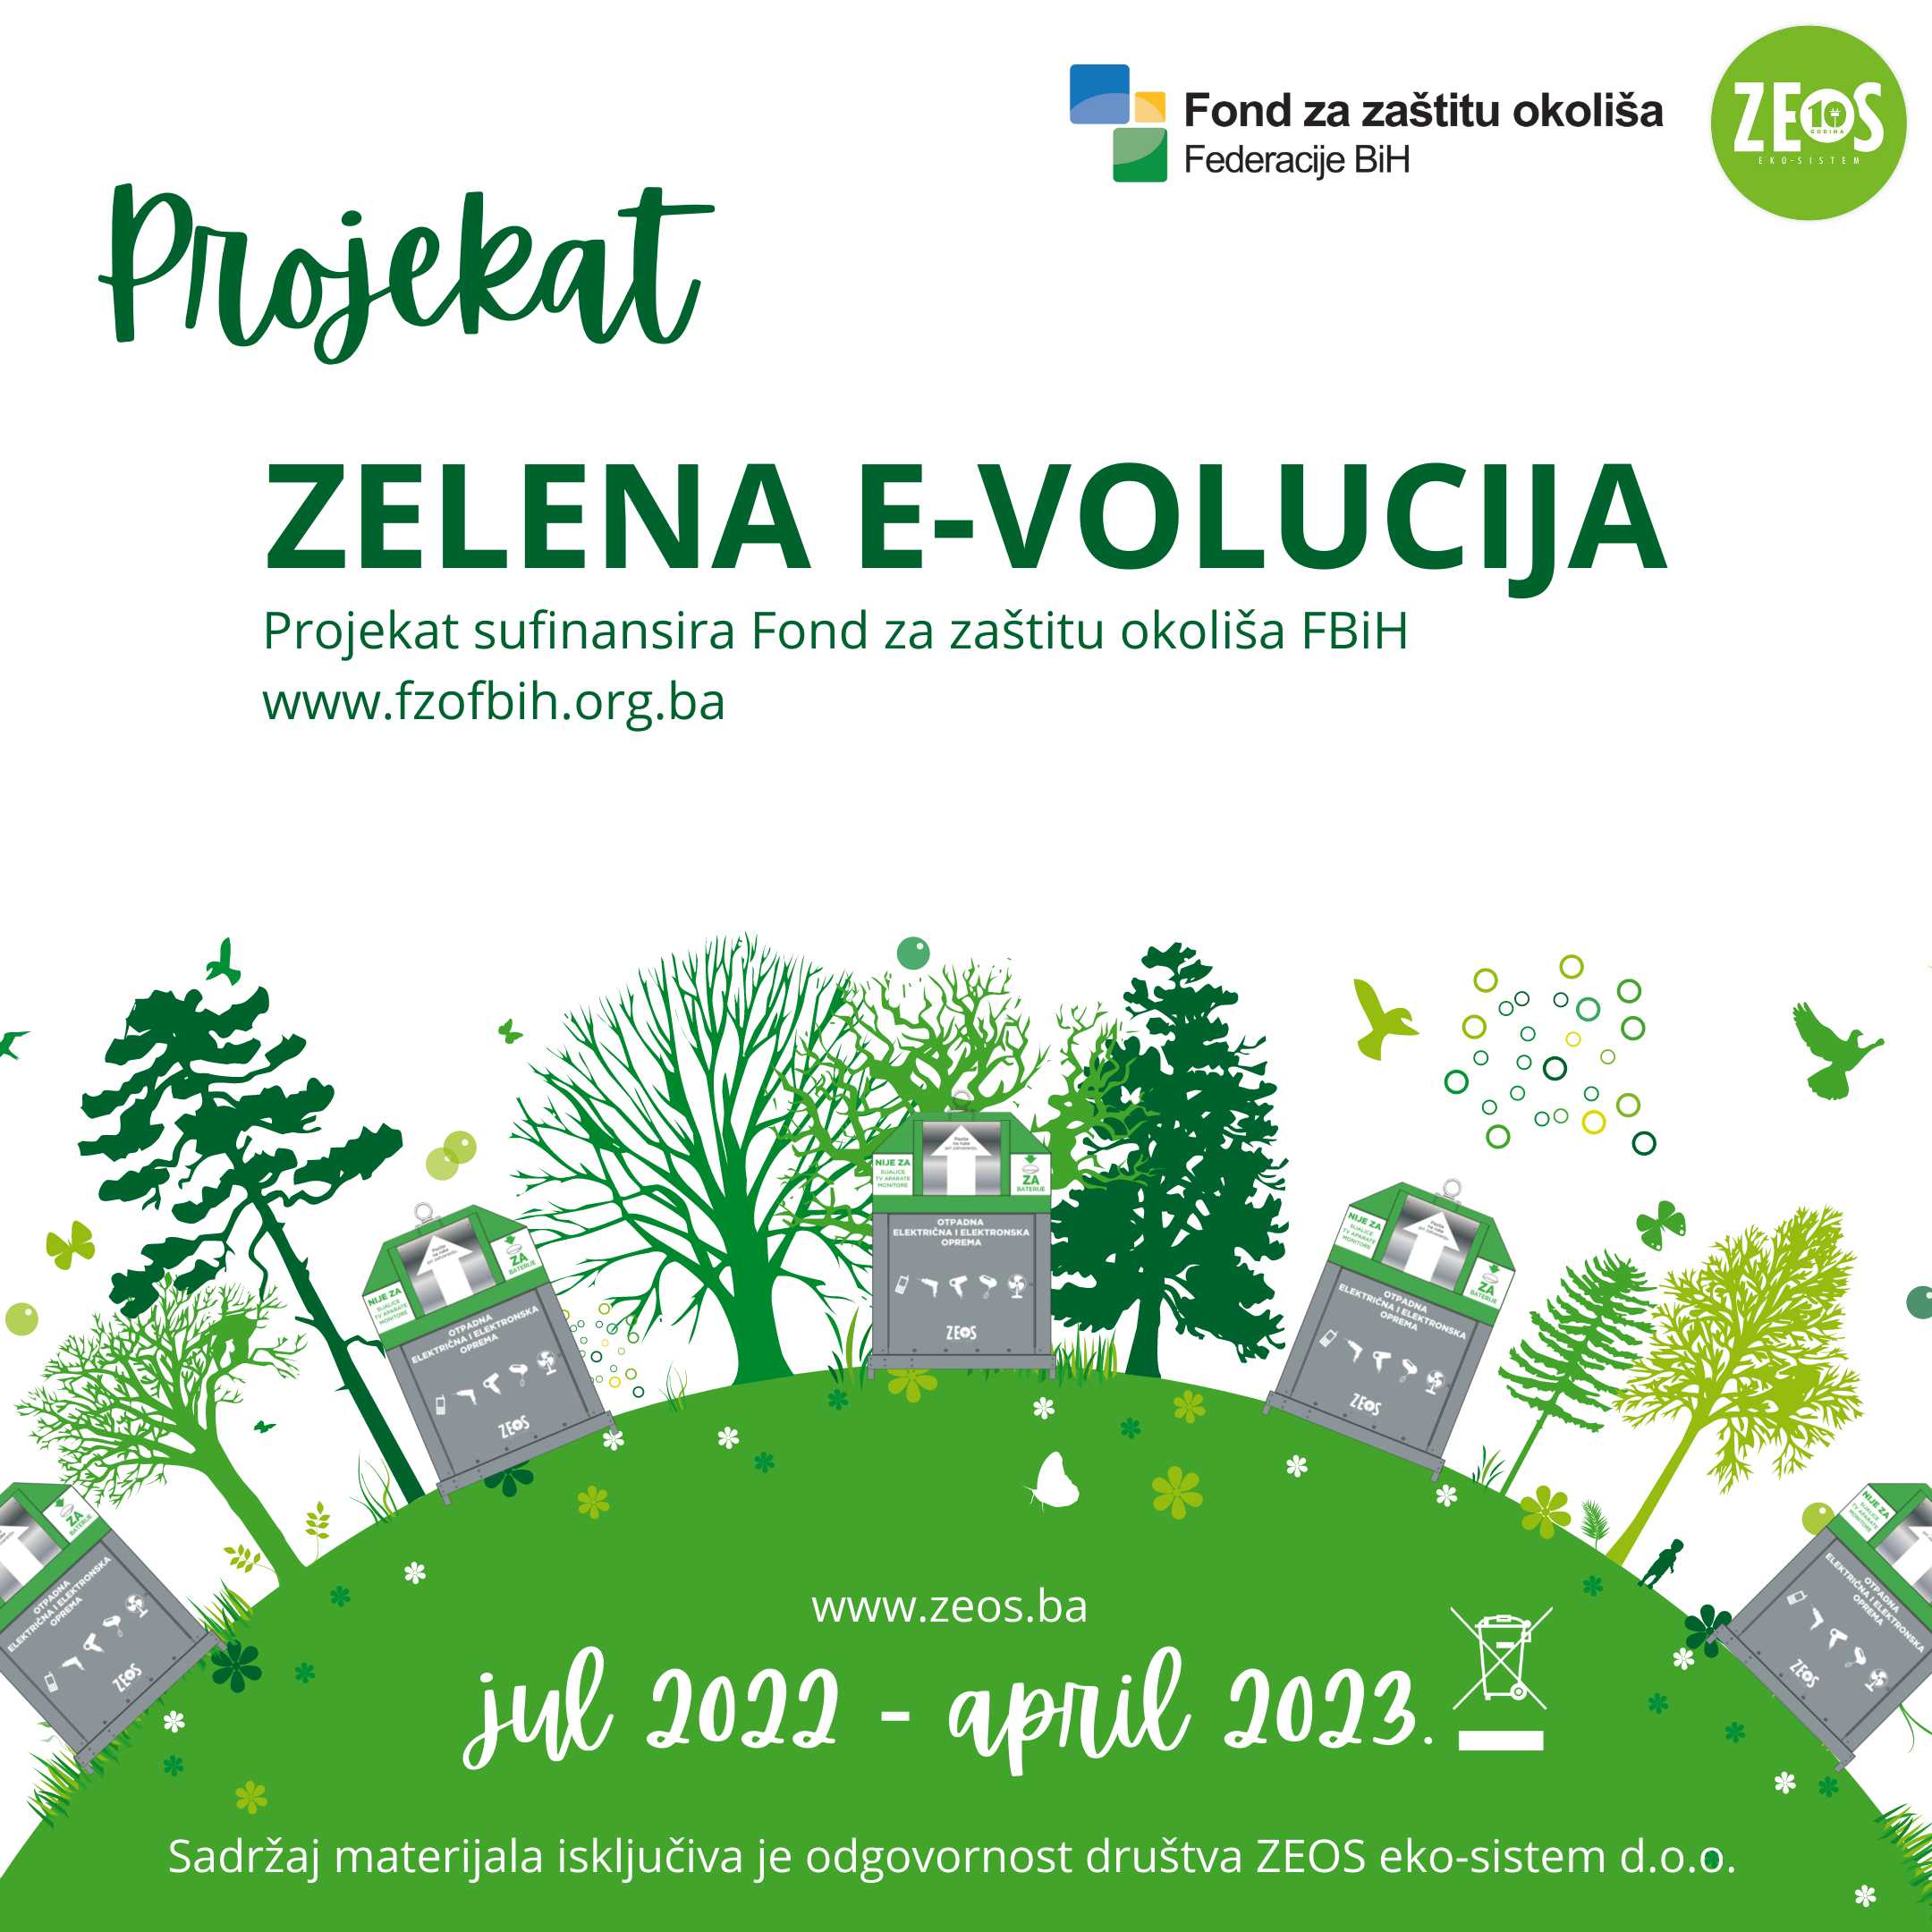 Projekat Zelena e-volucija